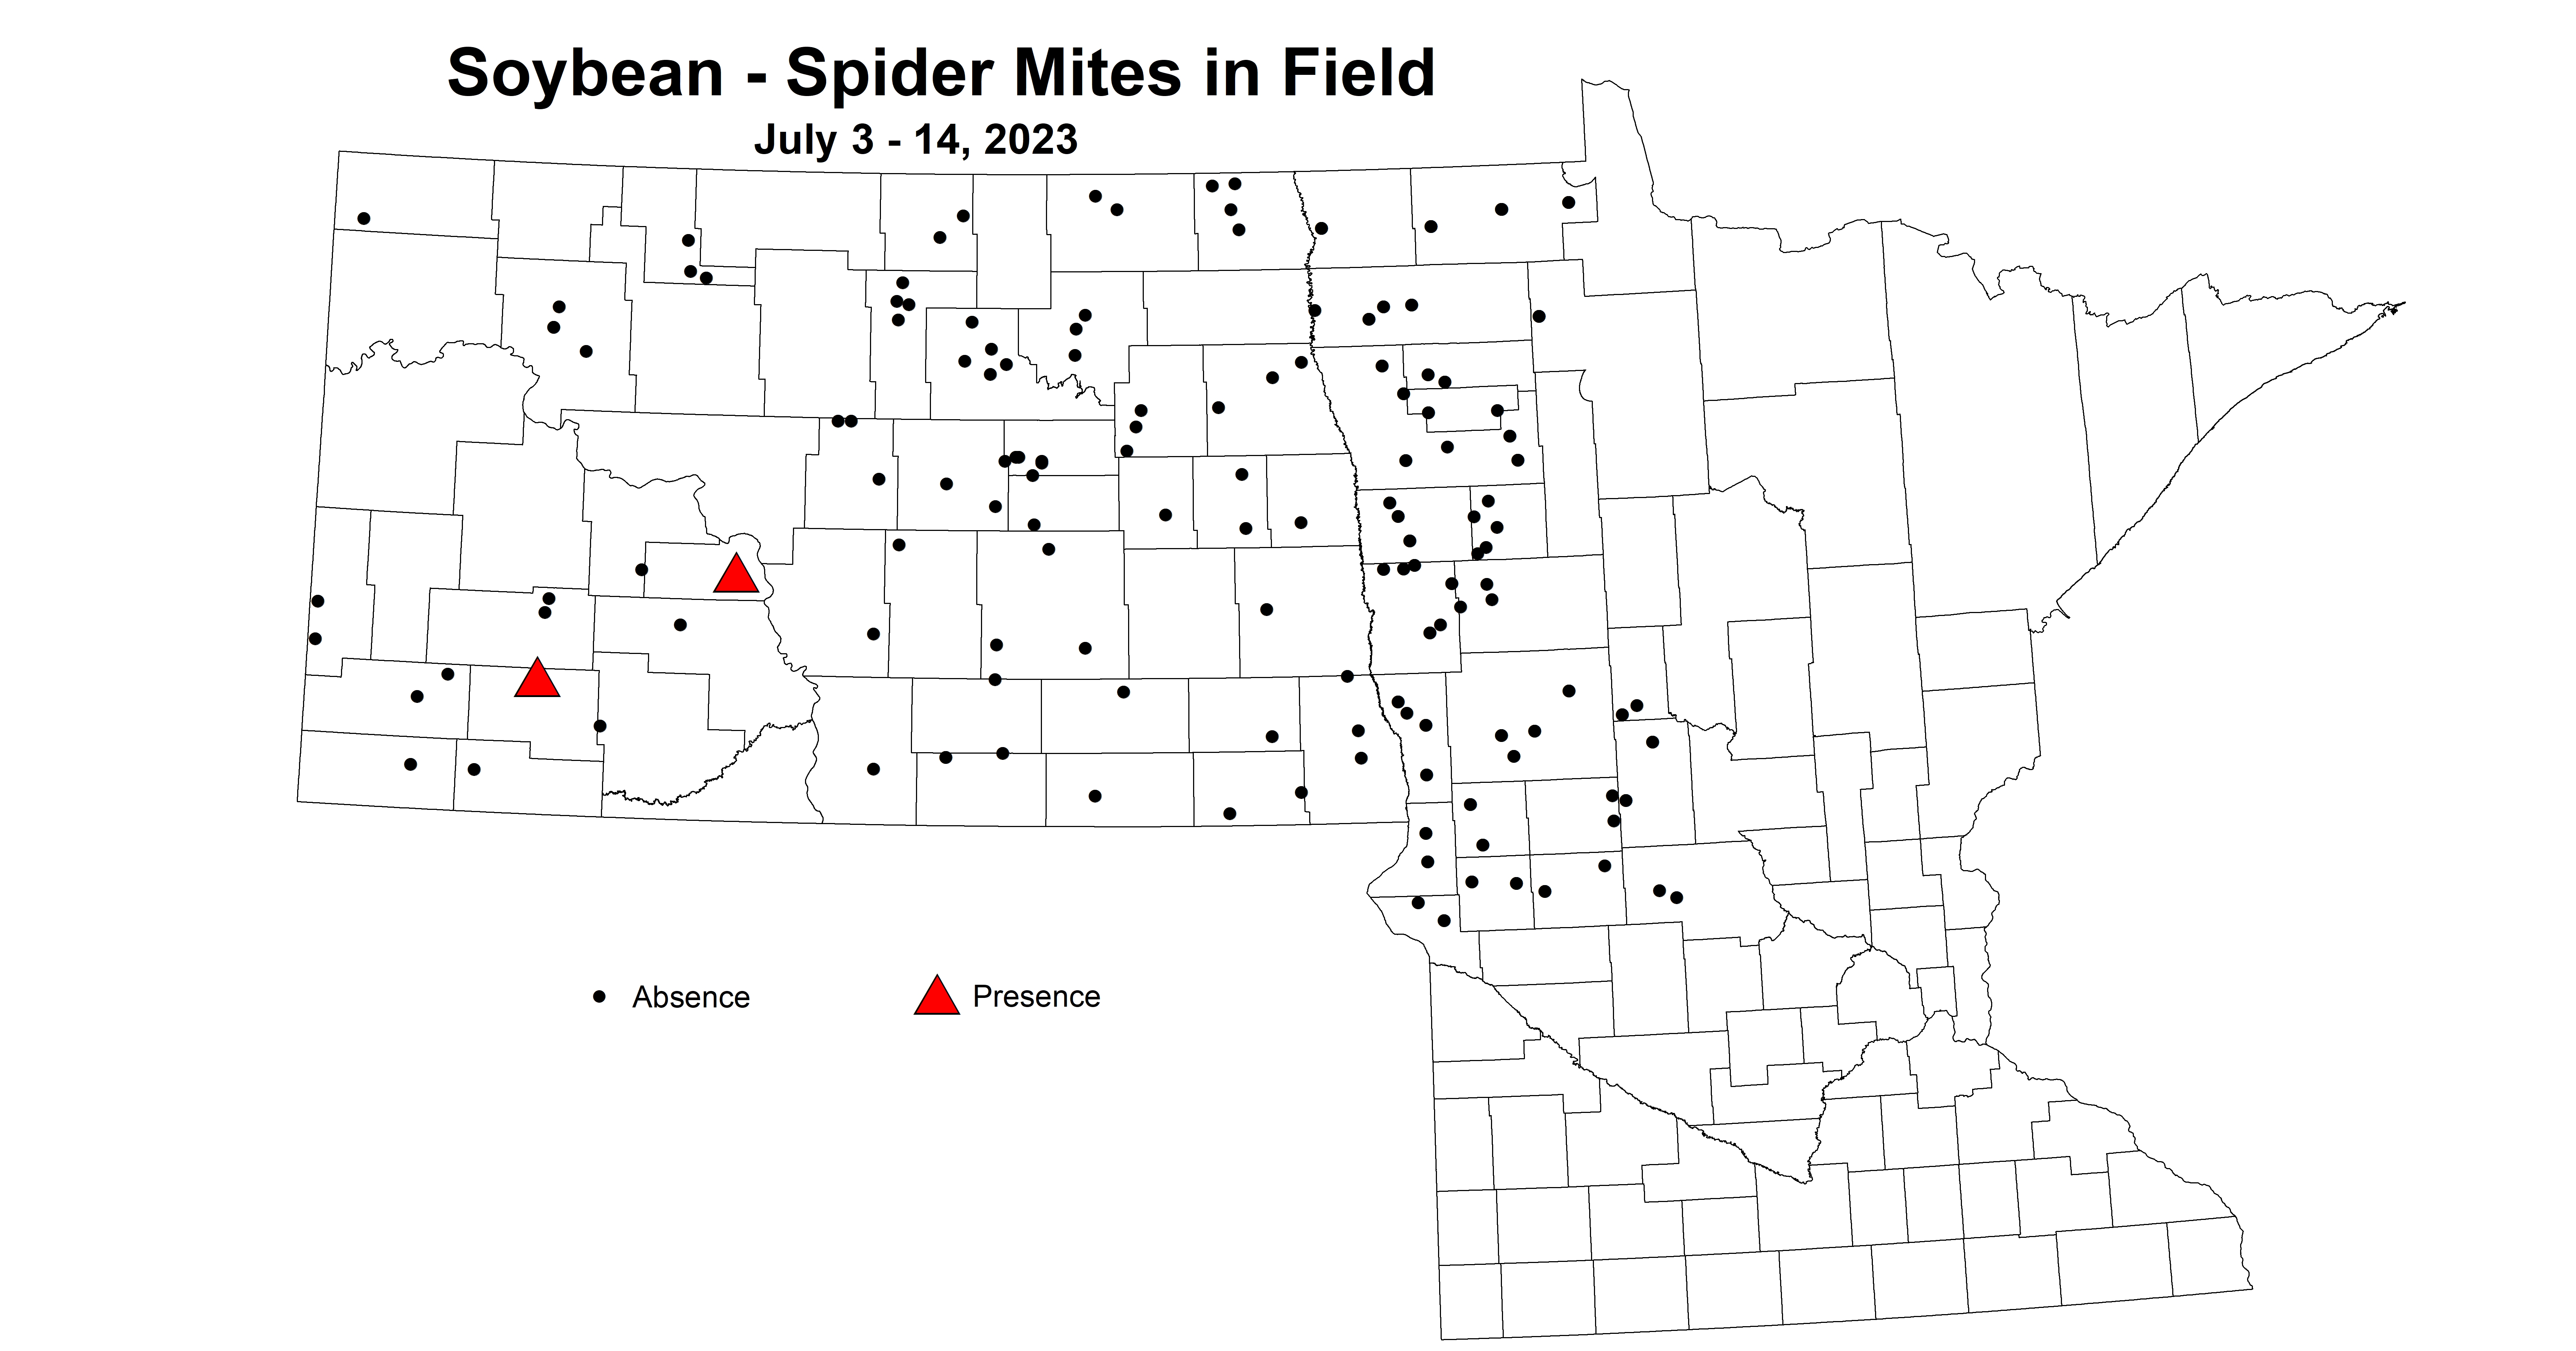 soybean spider mites in field July 3-14 2023